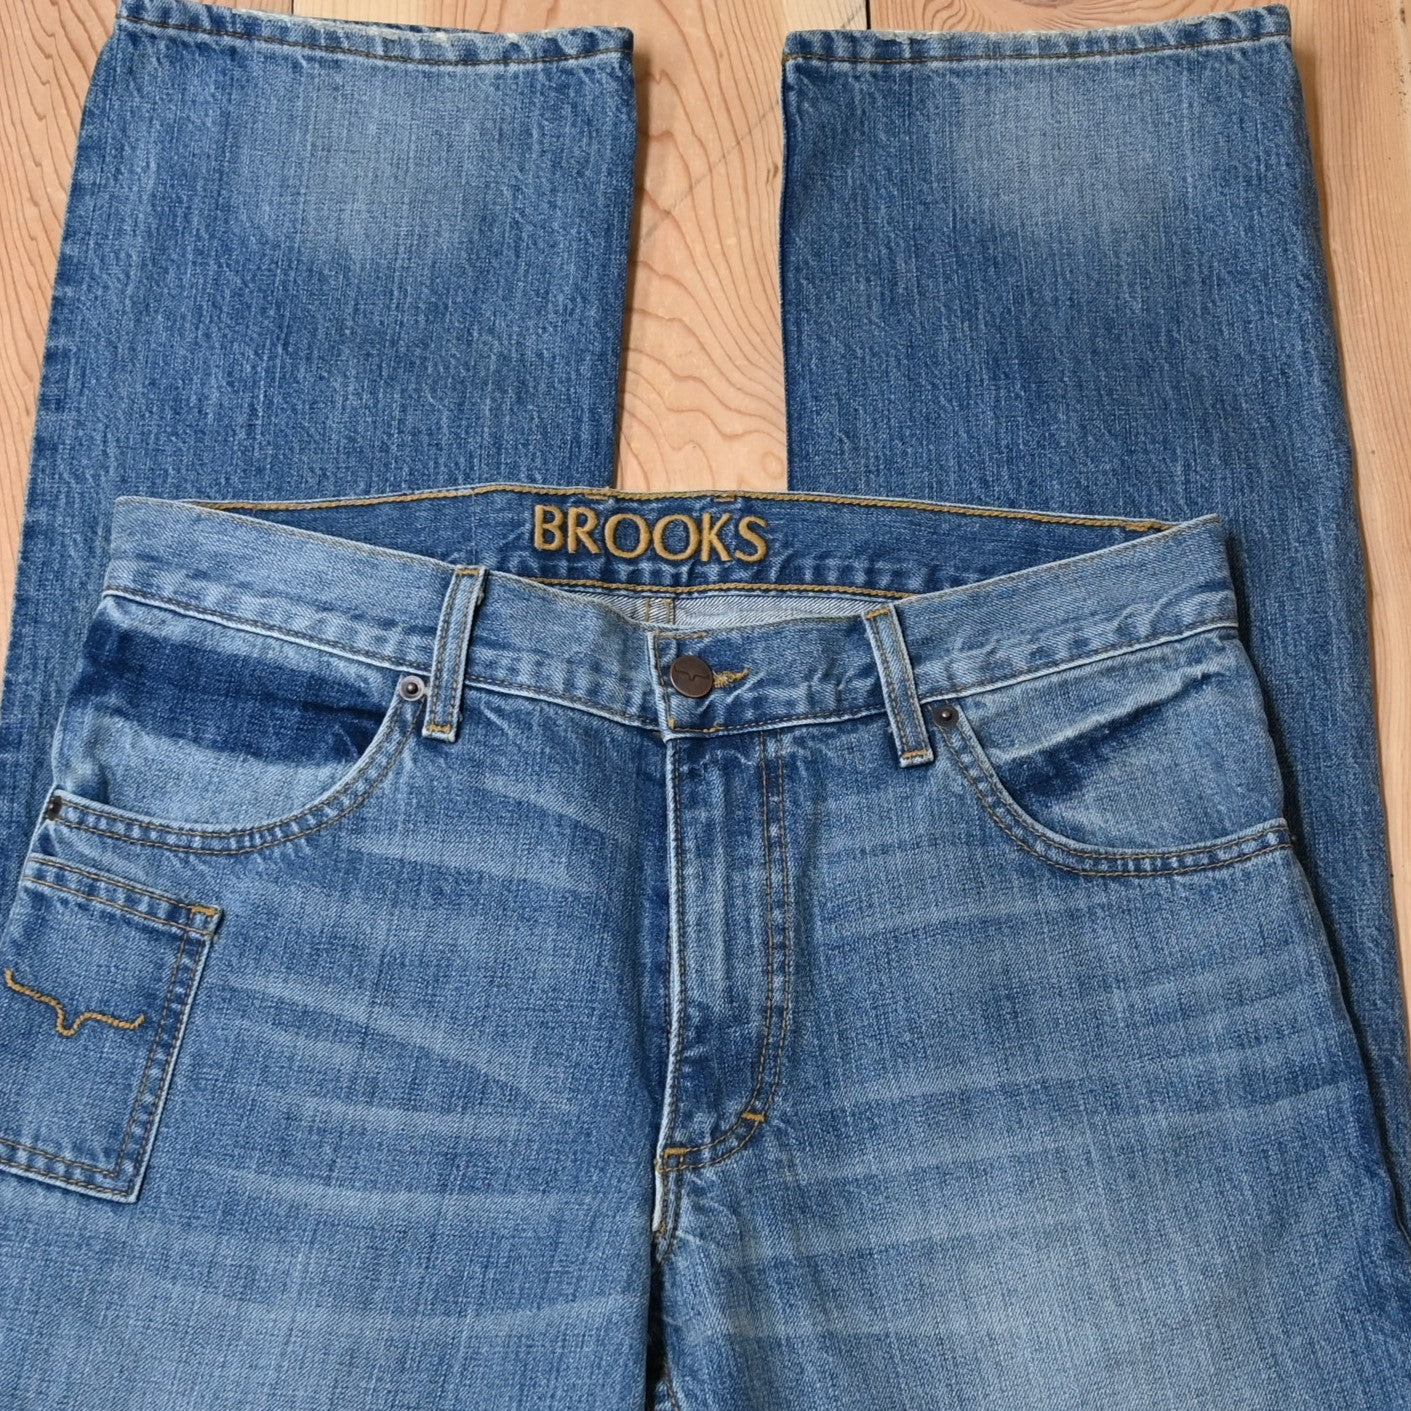 Kimes Brooks Jeans Mid Wash view of waist